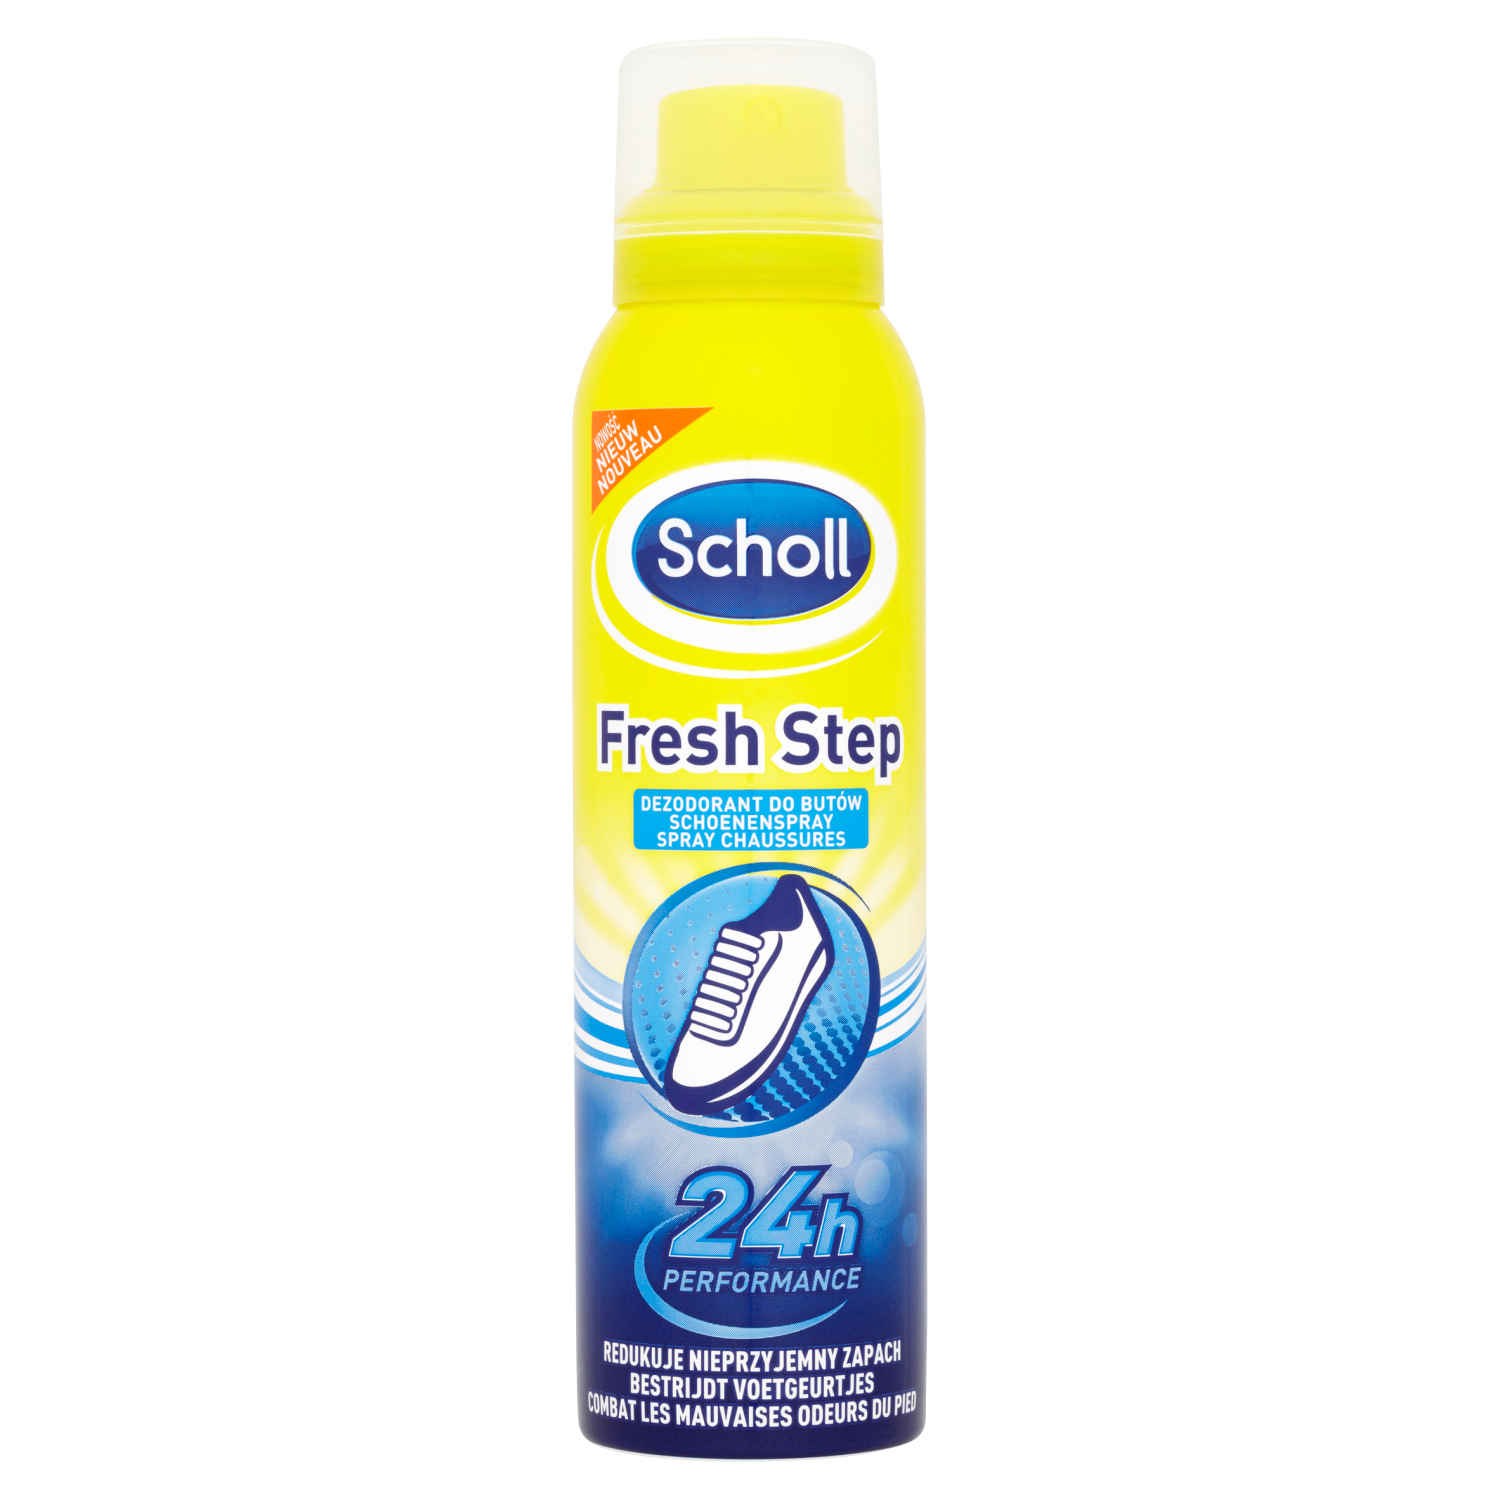 Scholl Fresh Step дезодорант для обуви уменьшающий неприятный запах, 150 мл scholl fresh step освежающий дезодорант для ног 150 мл